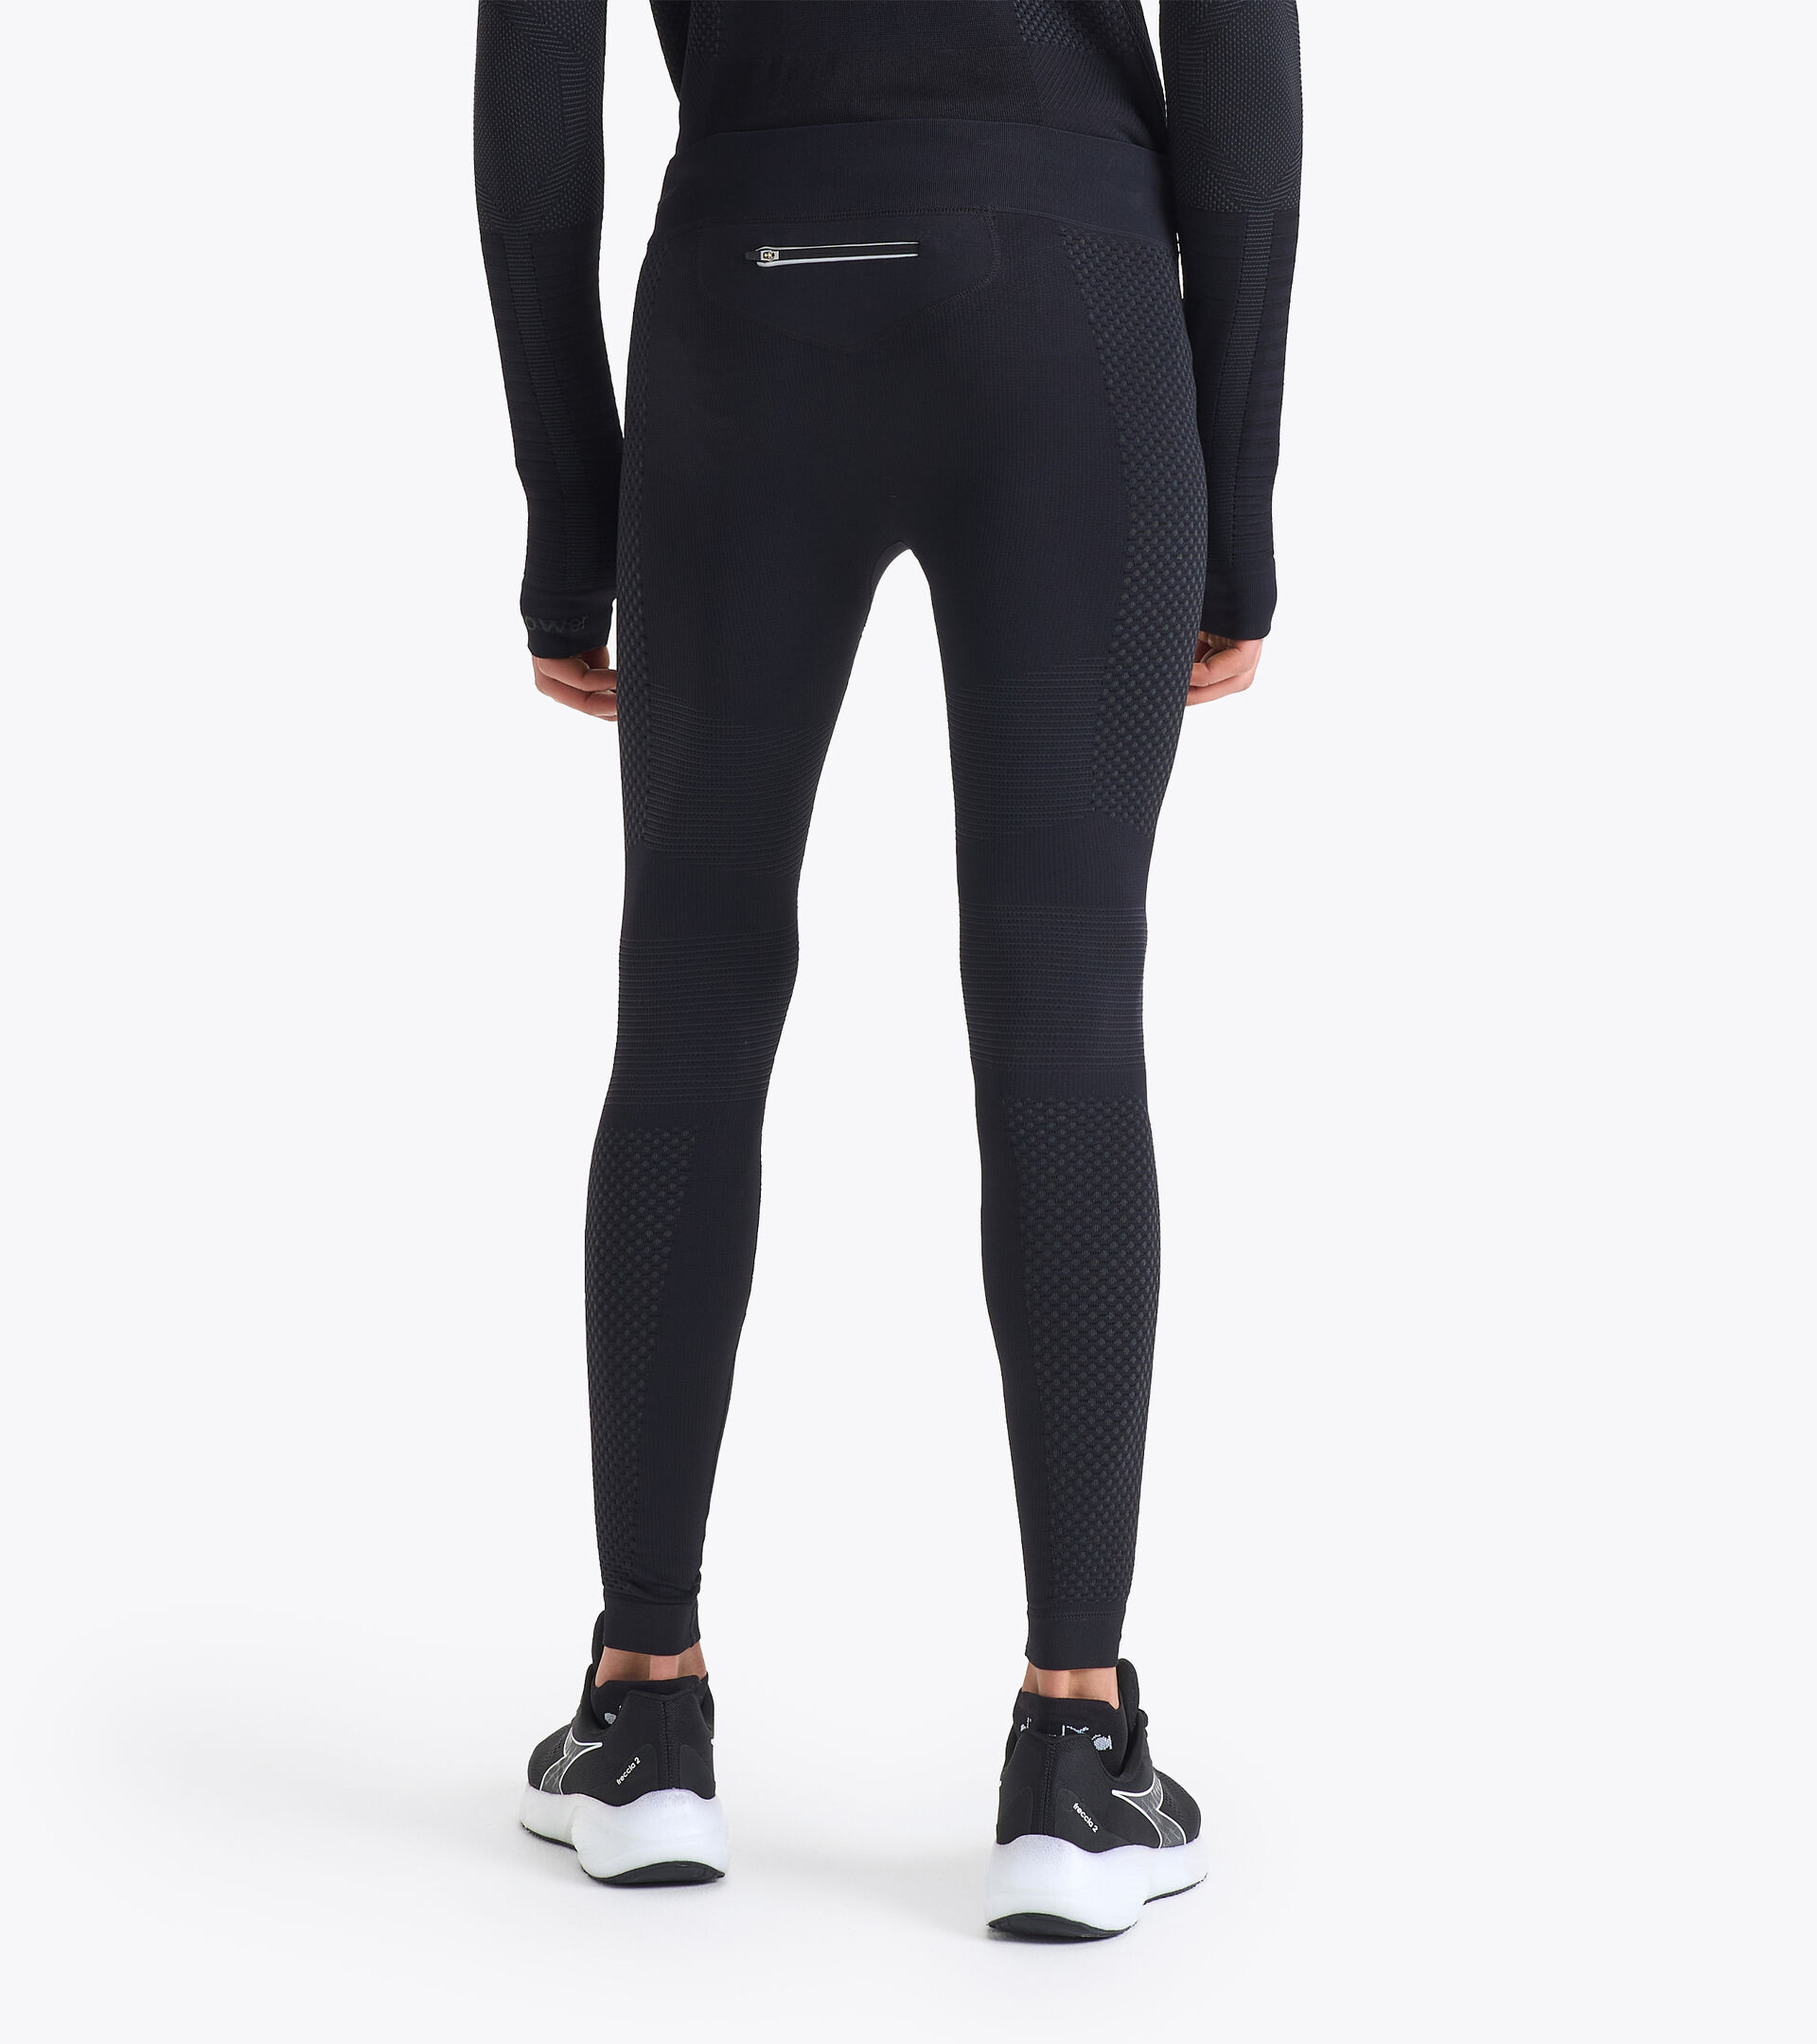 Nike Hyperwarm Leggings  Leggings are not pants, Clothes design